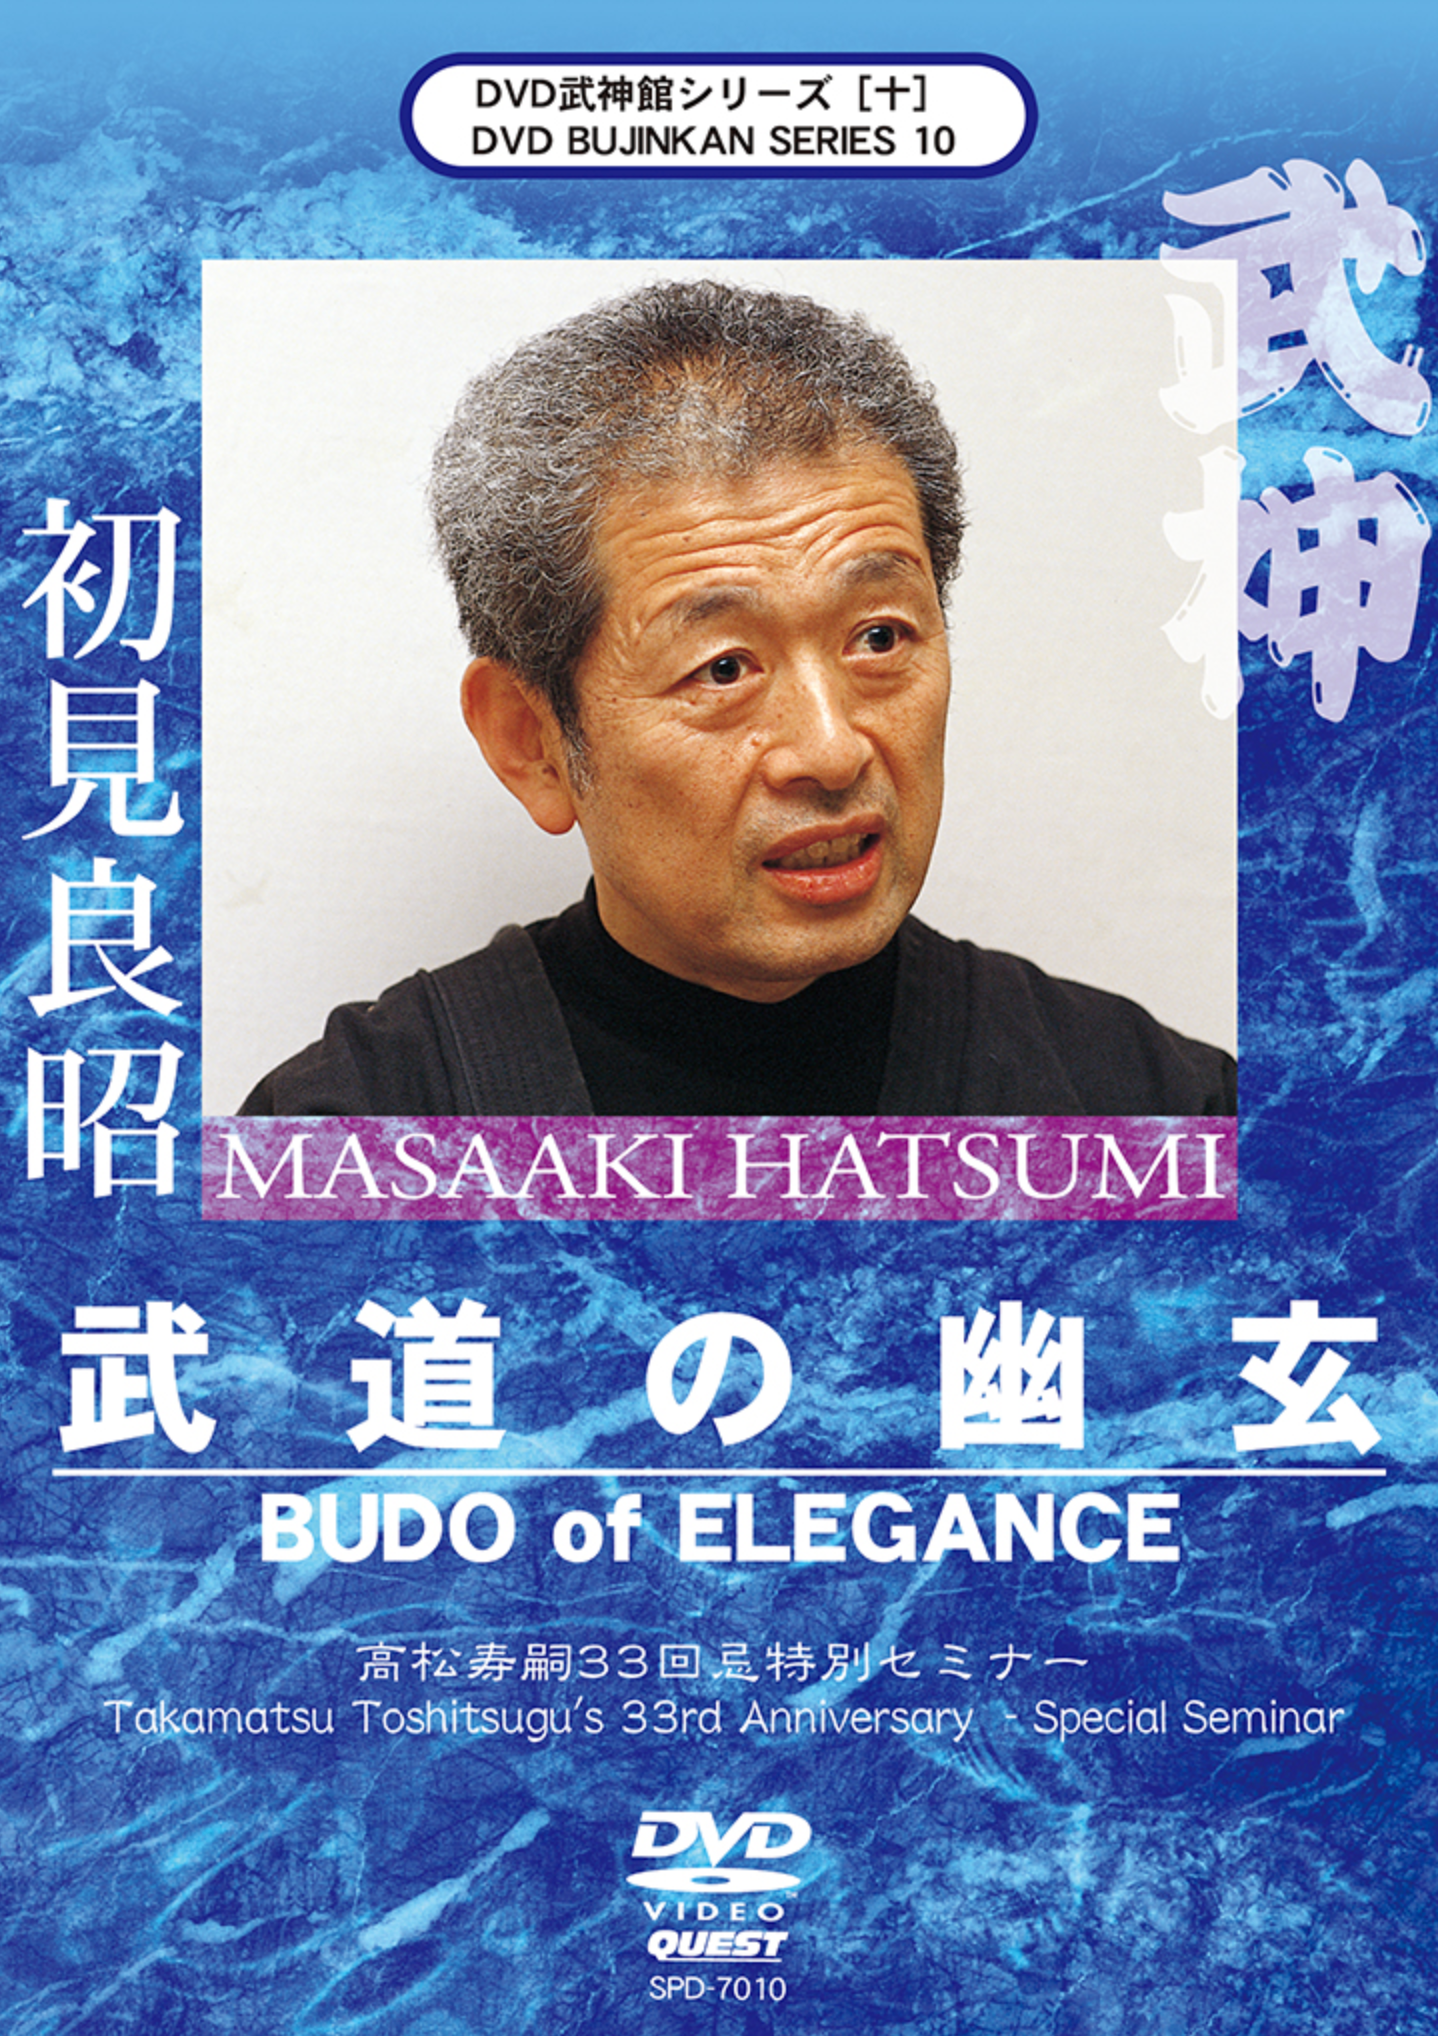 Bujinkan DVD Series 10: Budo of Elegance with Masaaki Hatsumi - Budovideos Inc